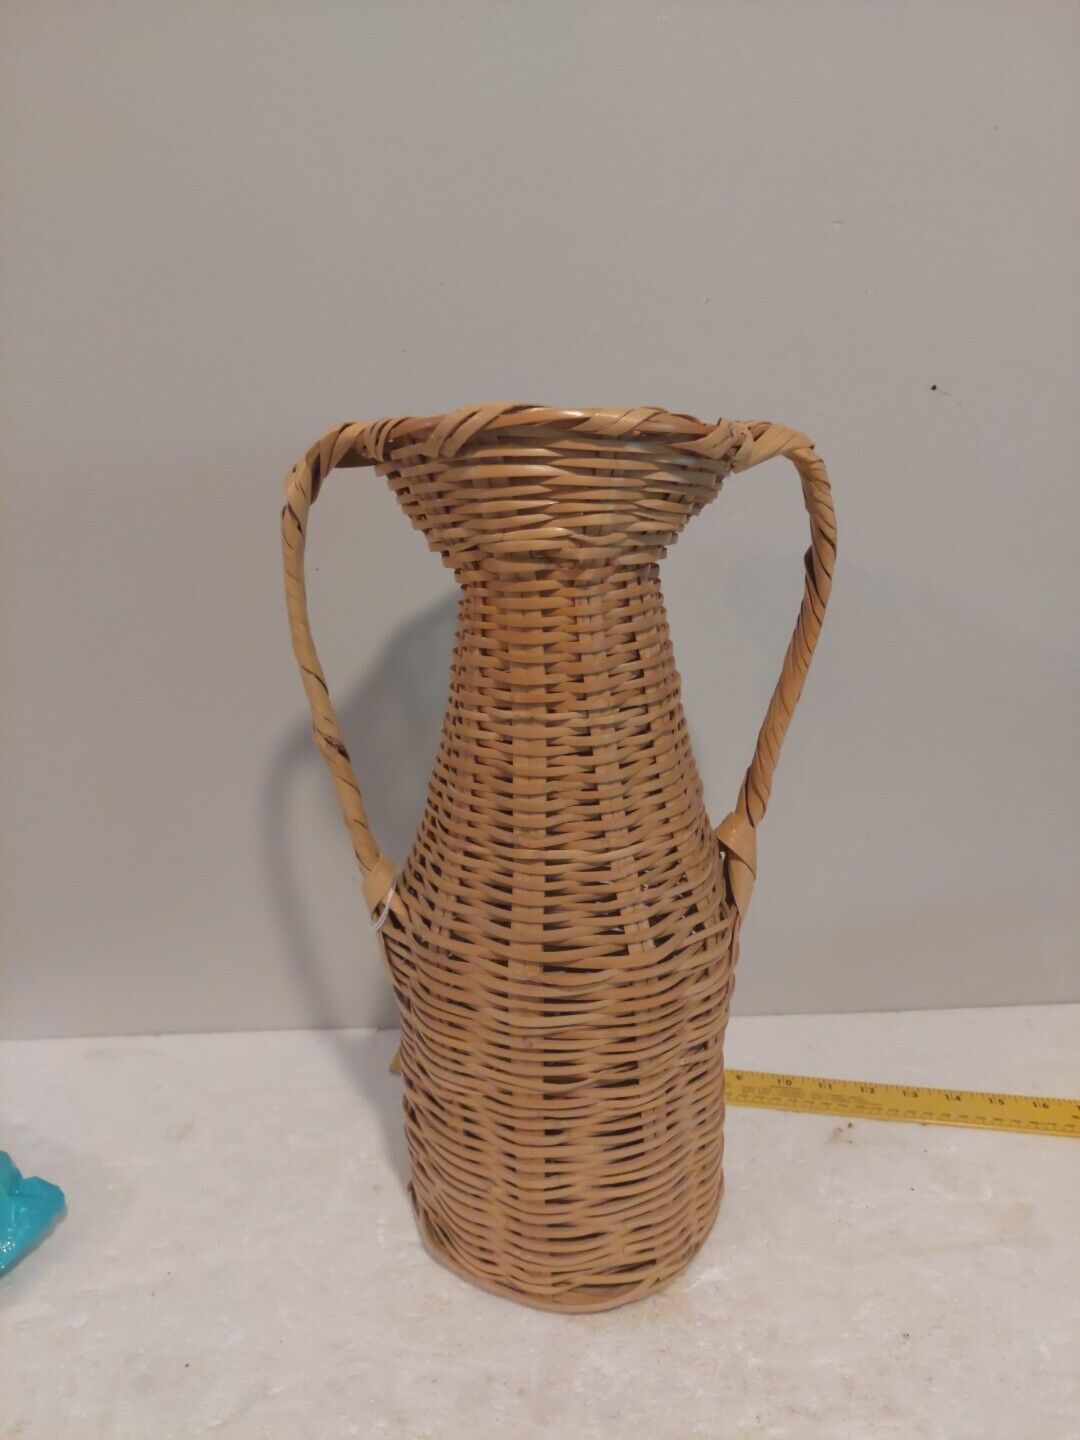 Tall Vintage Wicker Rattan Vase Basket  Boho 60’s/70’s Chic 2 Handled Basket